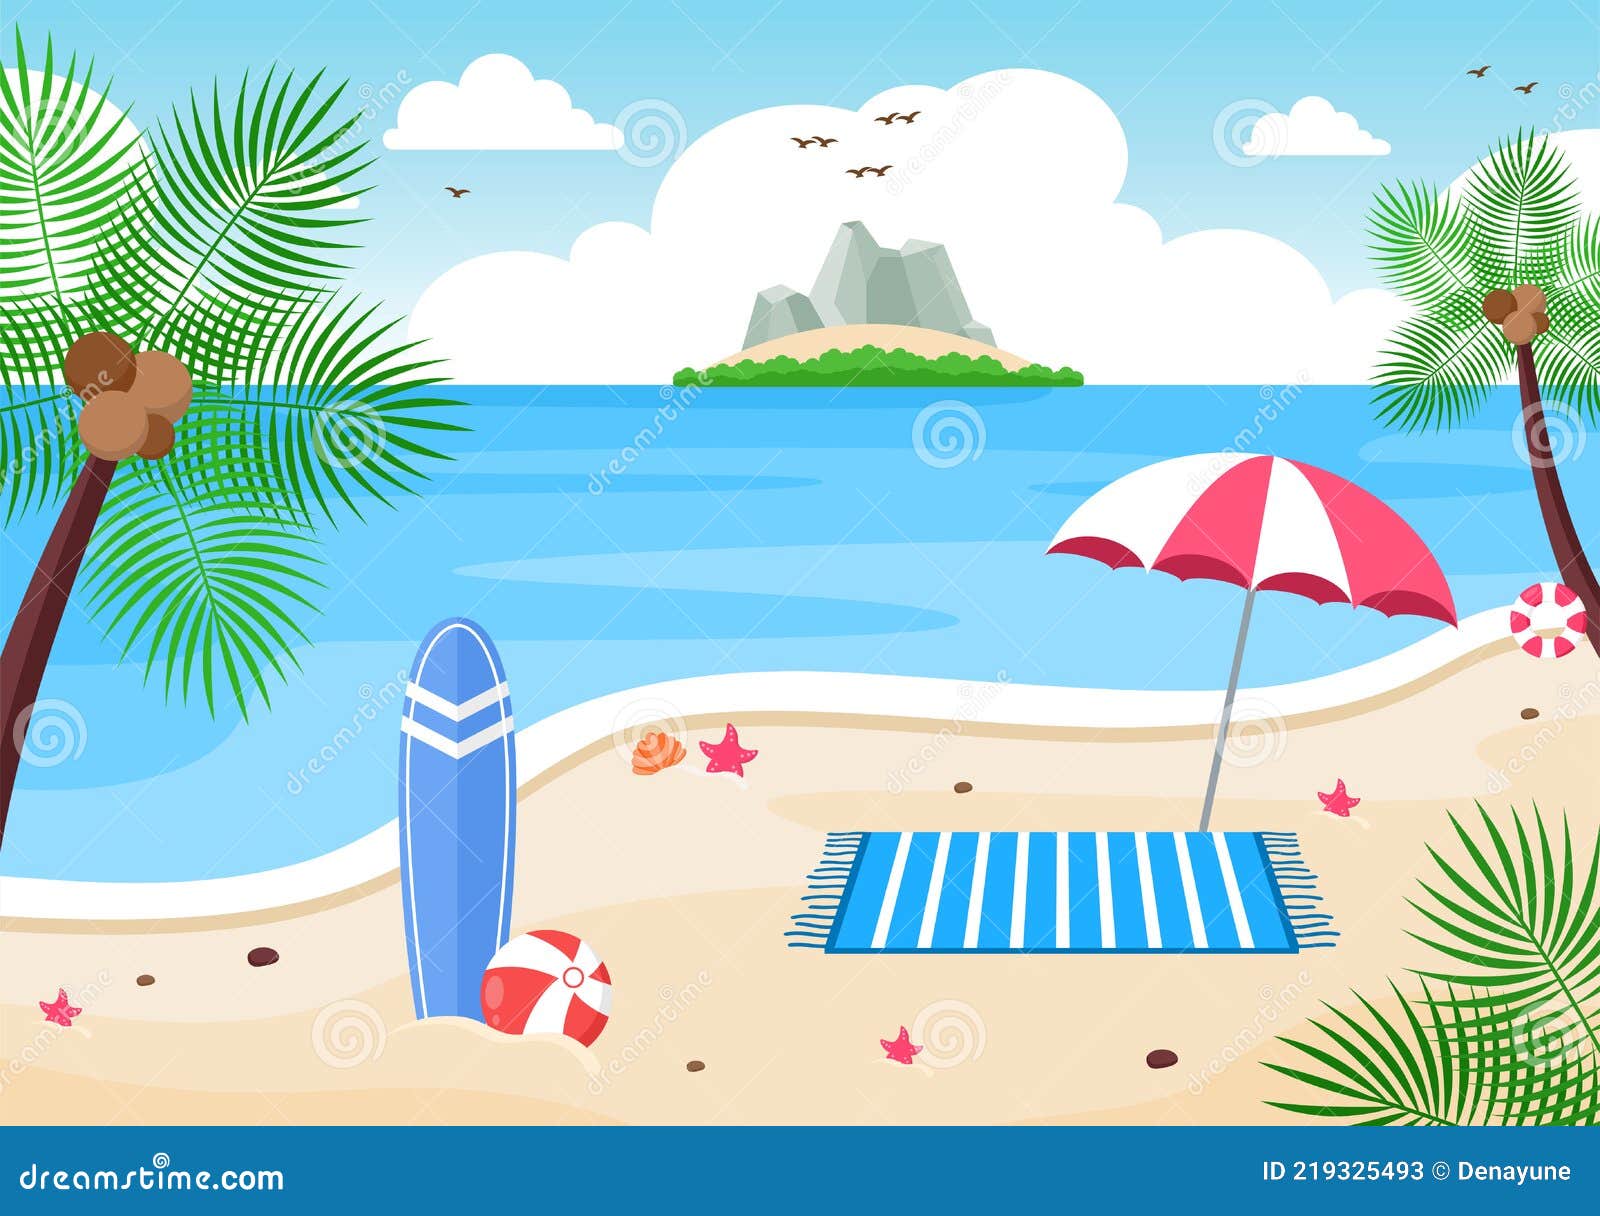 6,508,799 Beach Sand Images, Stock Photos, 3D objects, & Vectors |  Shutterstock